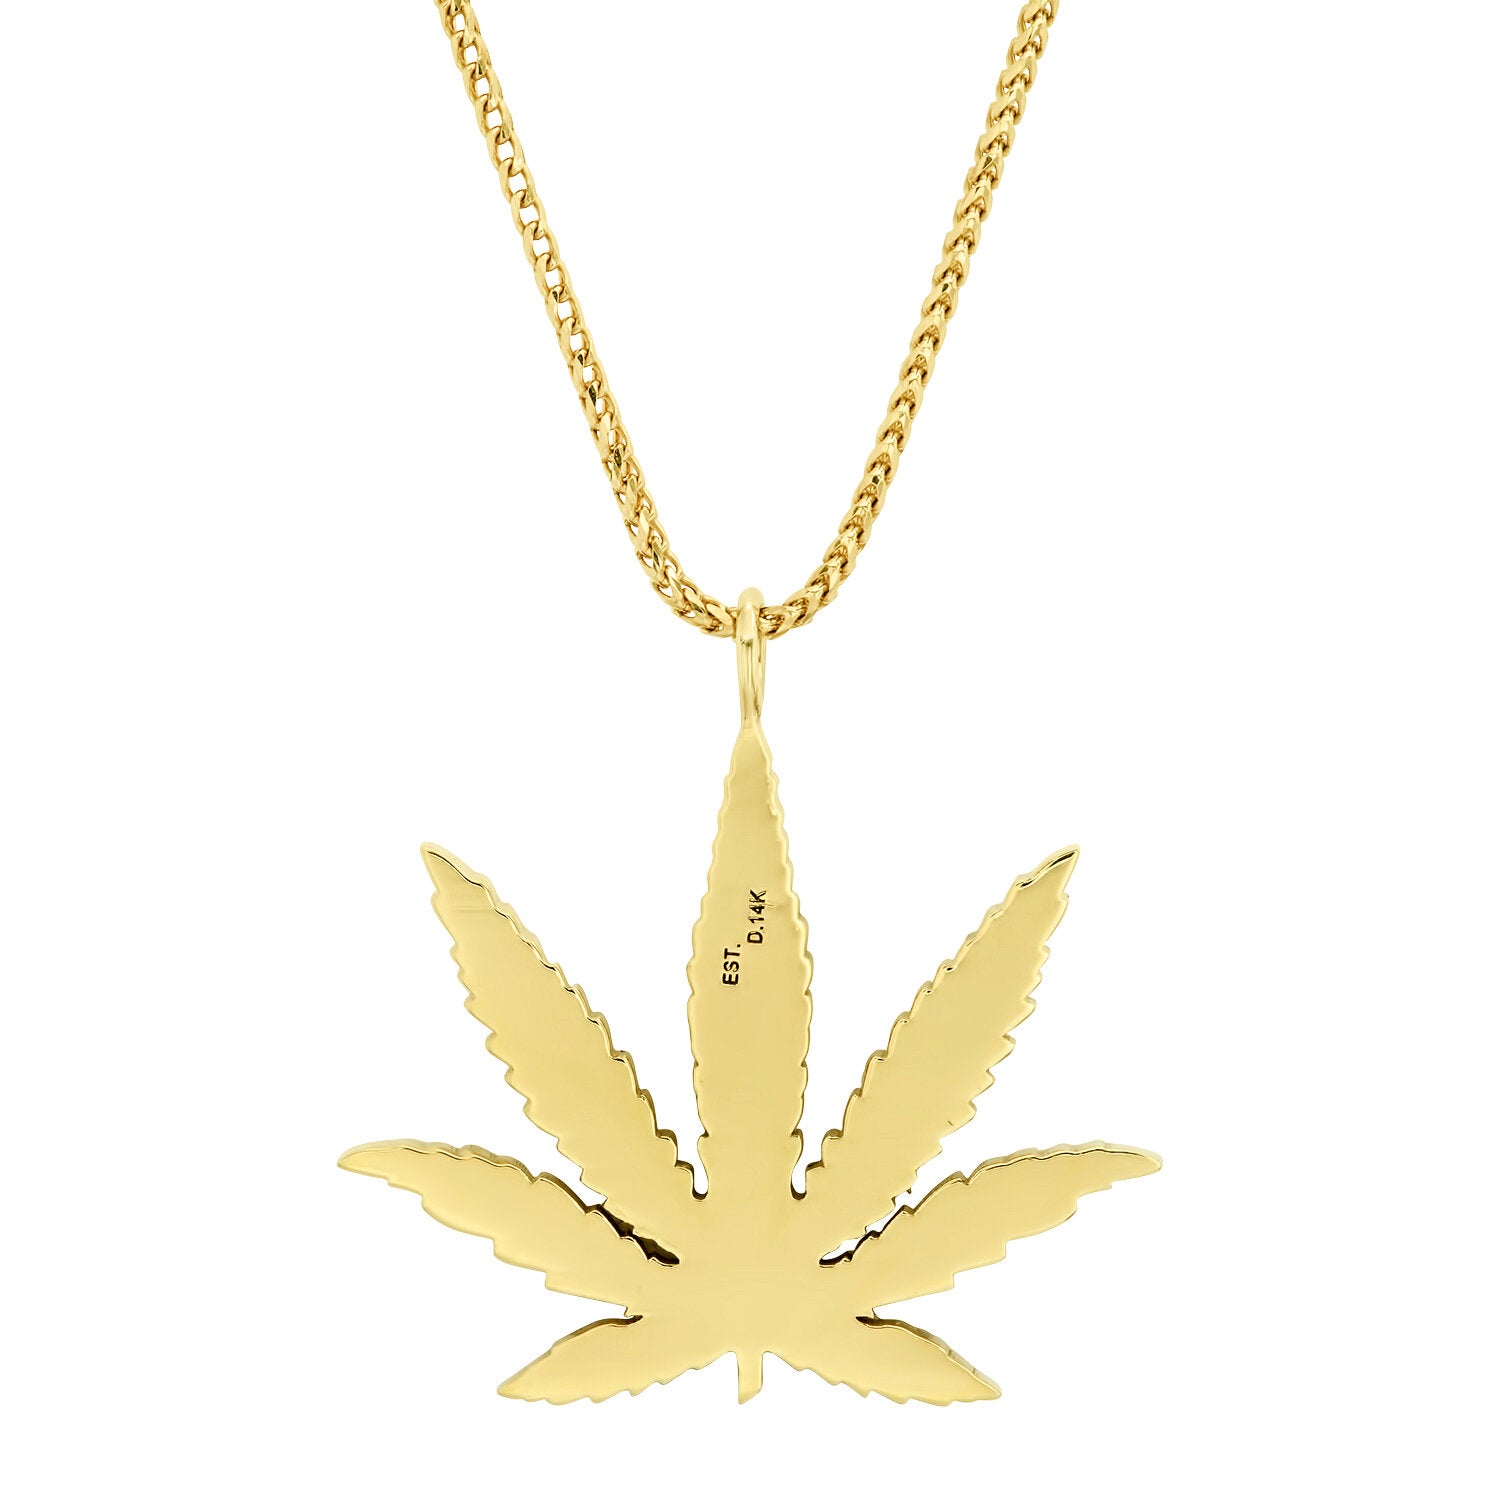 Emerald Cannabis Pendant Necklace